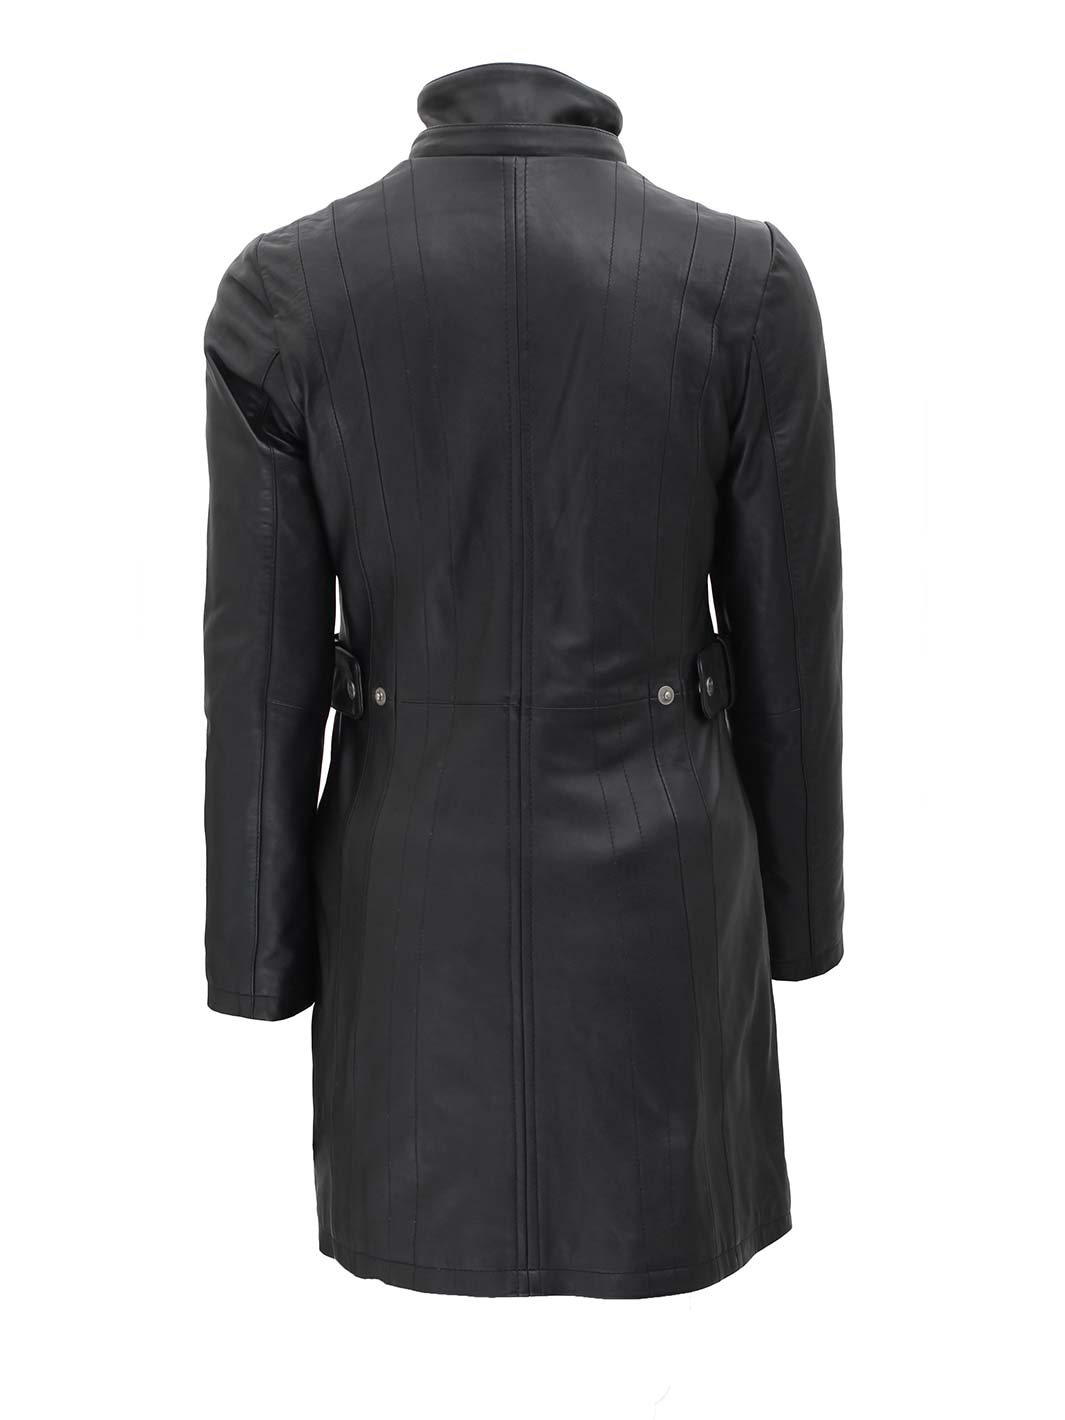 Women Long Coat